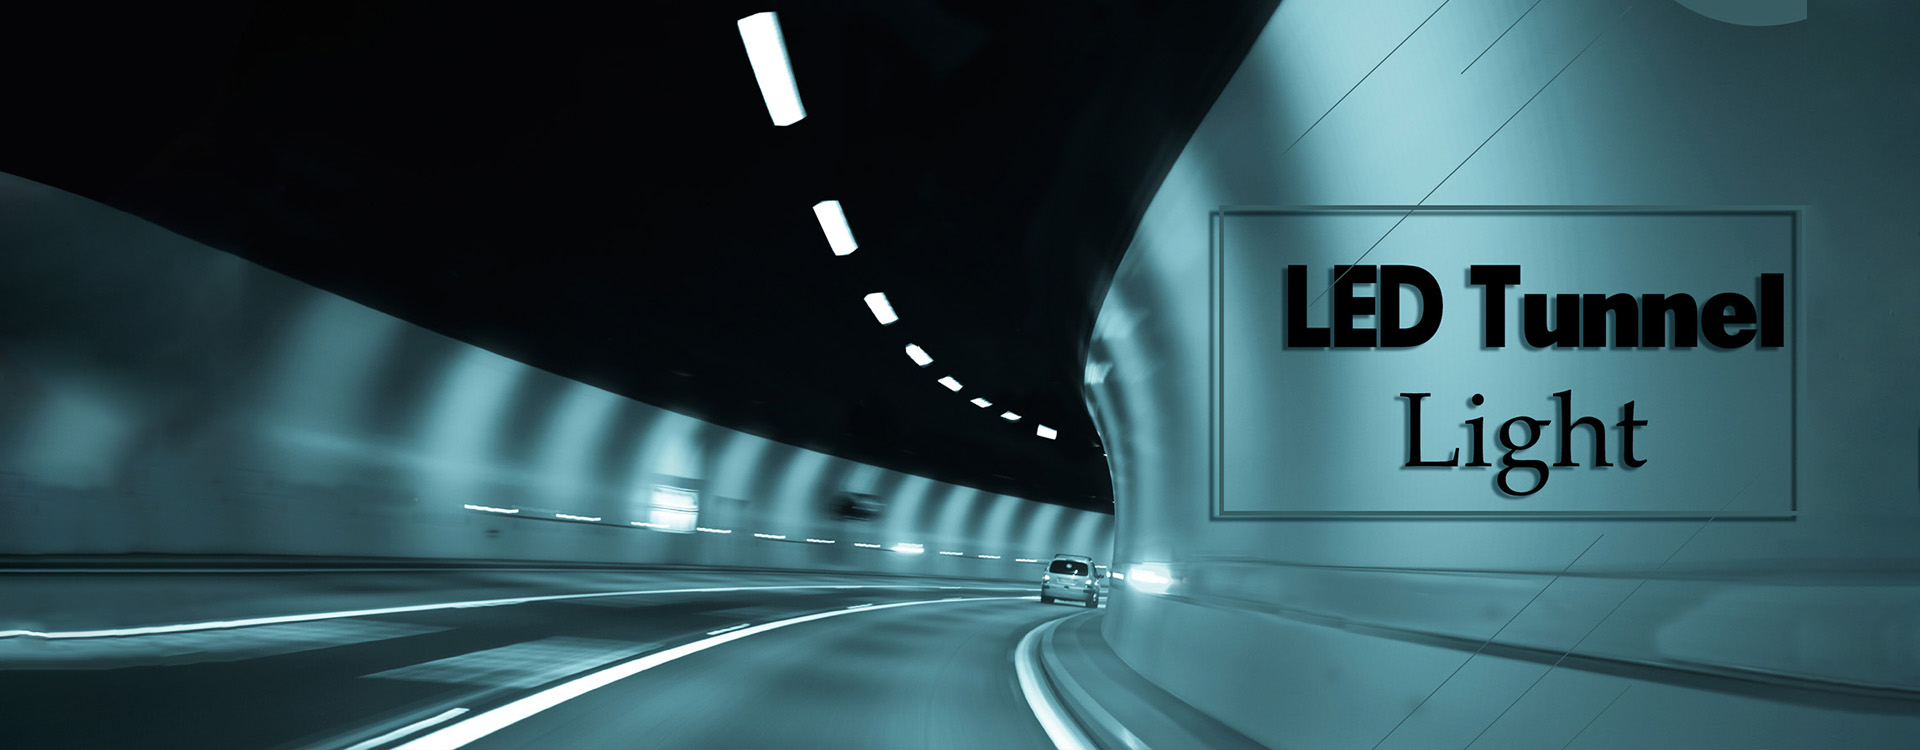 led-tunel-svjetlo-21